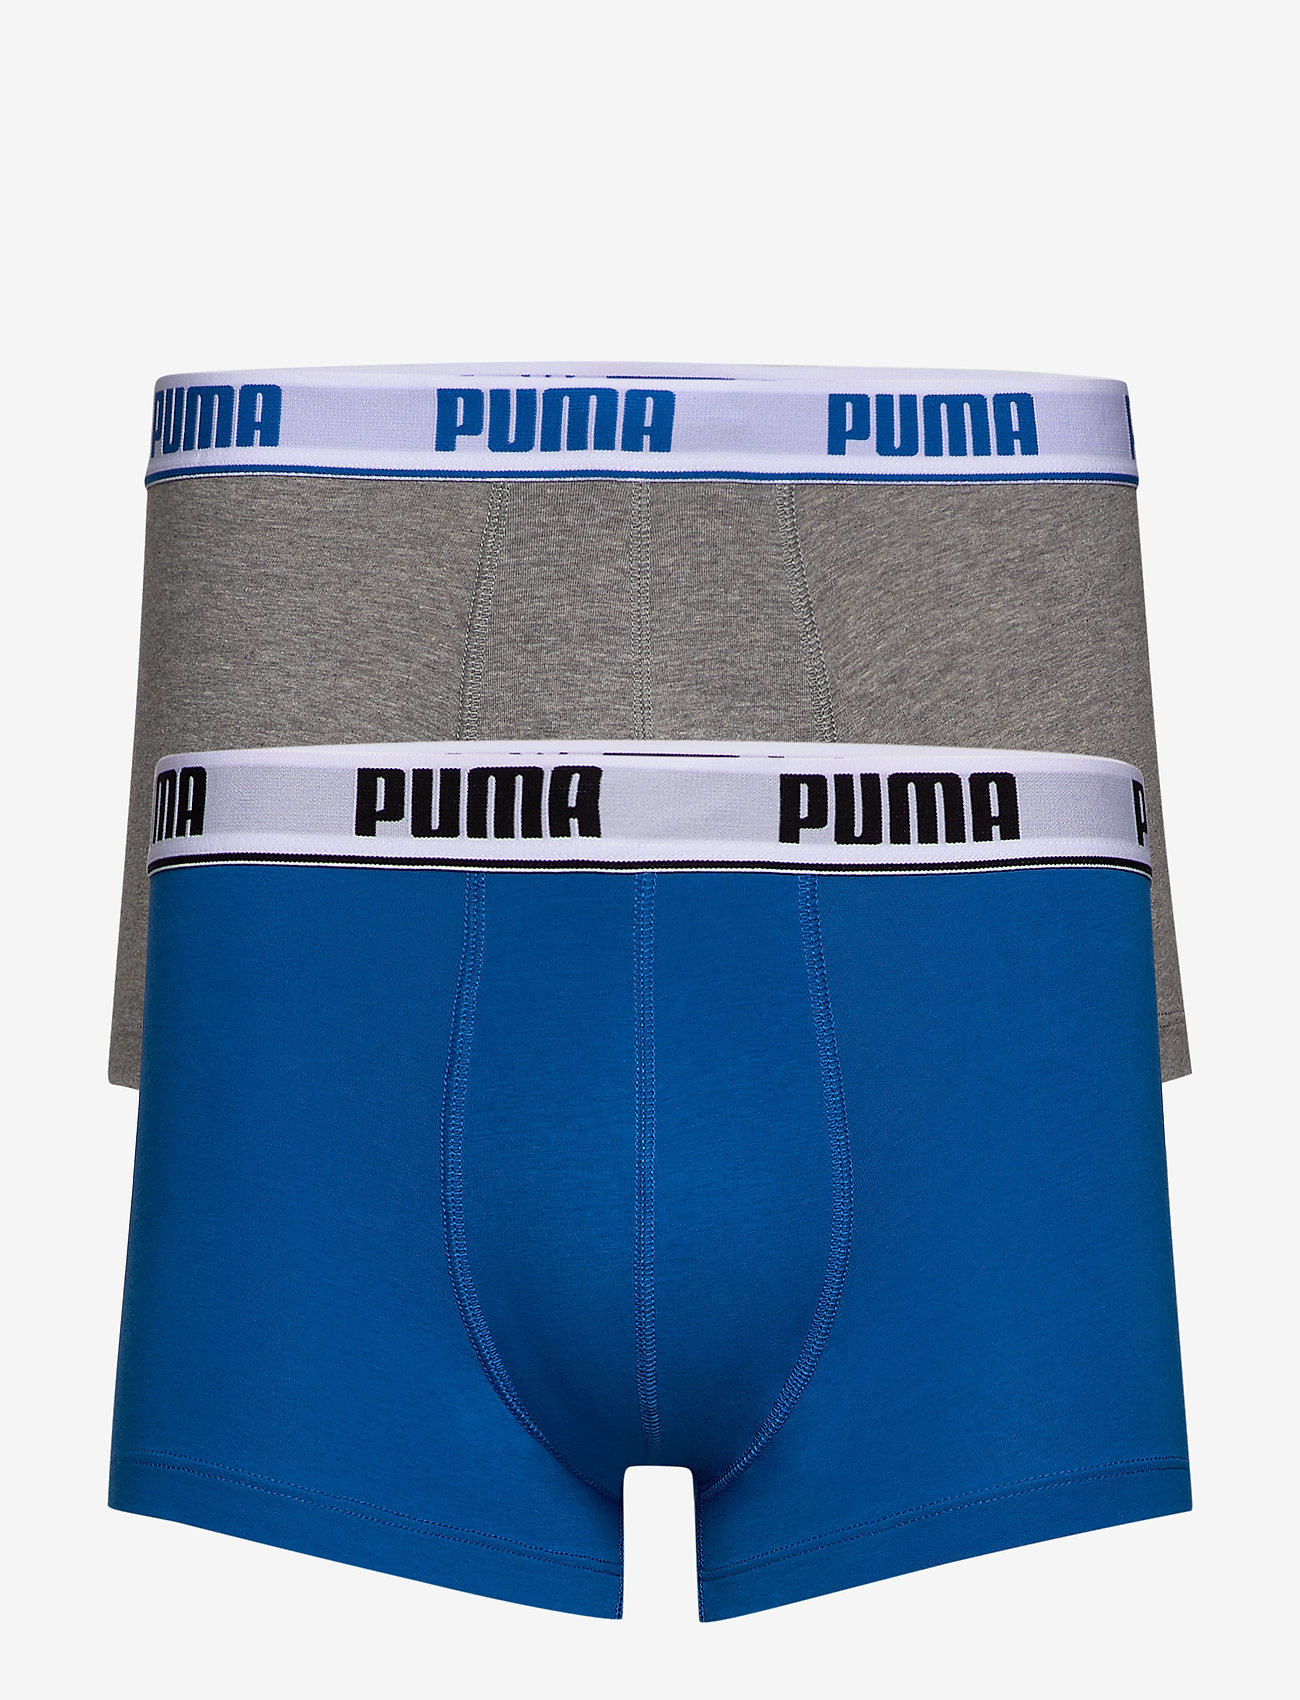 puma trunk underwear